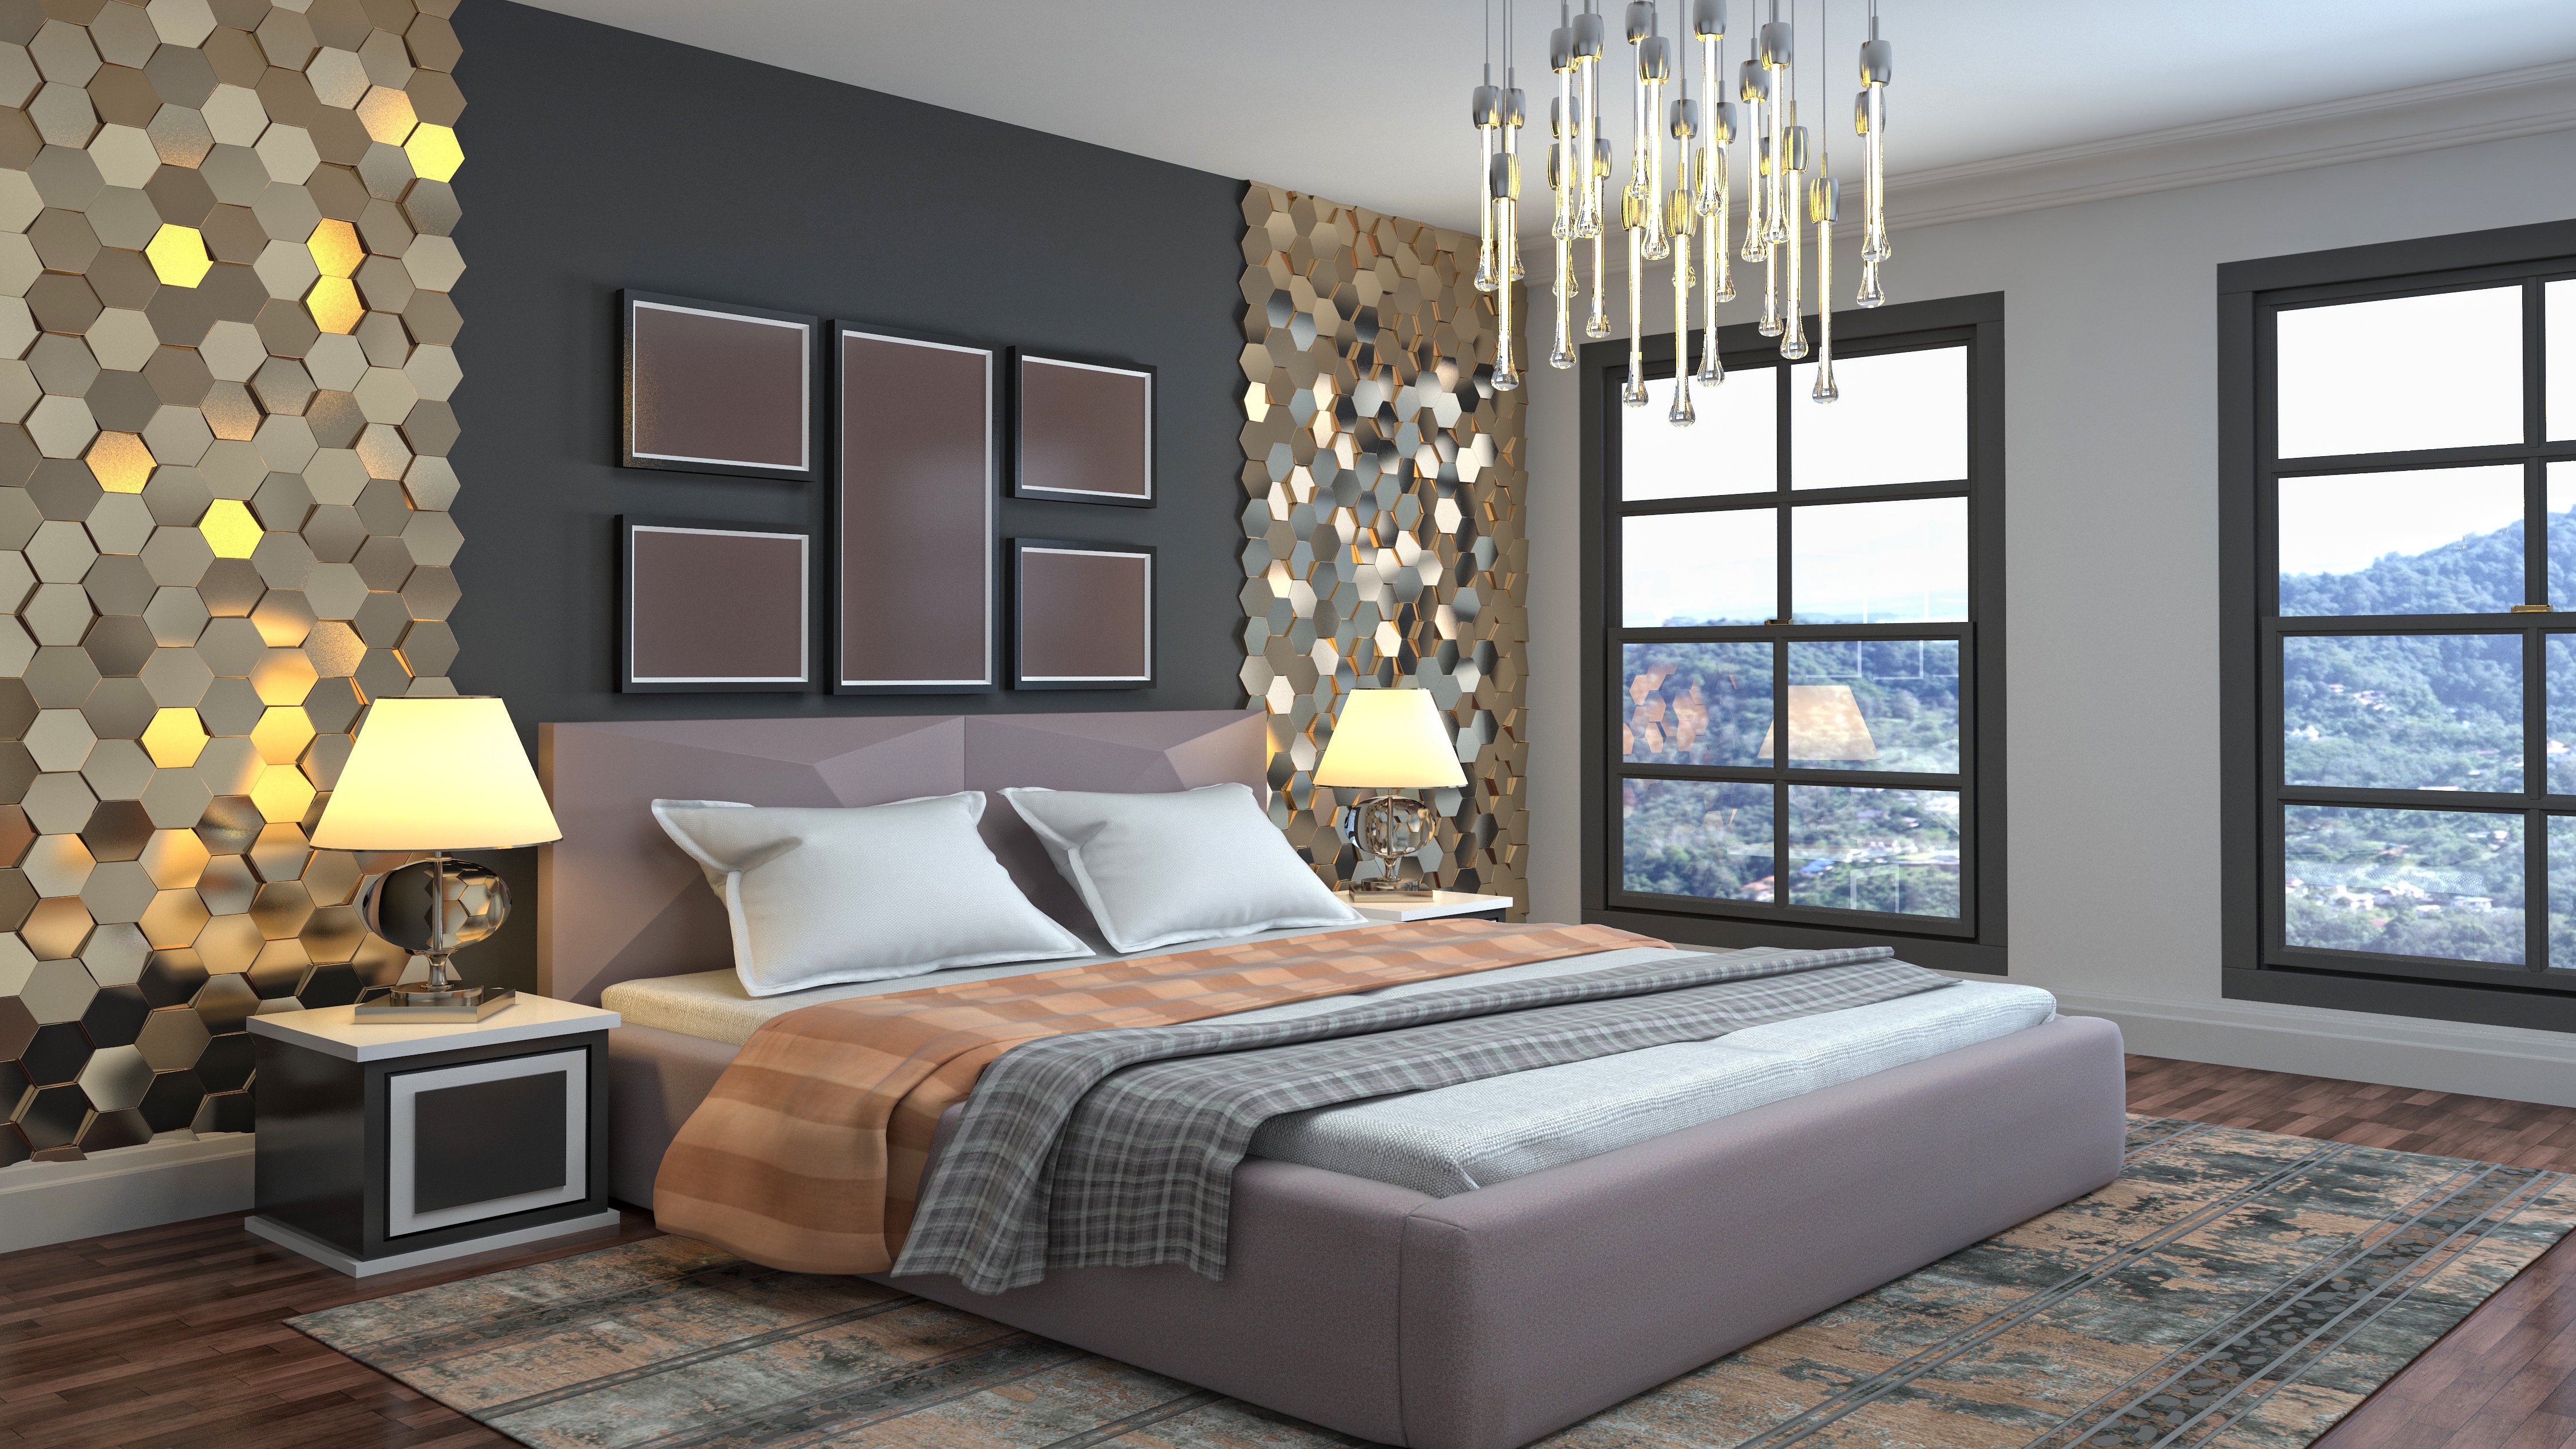 Bed Bedroom Furniture Room 4500x2532